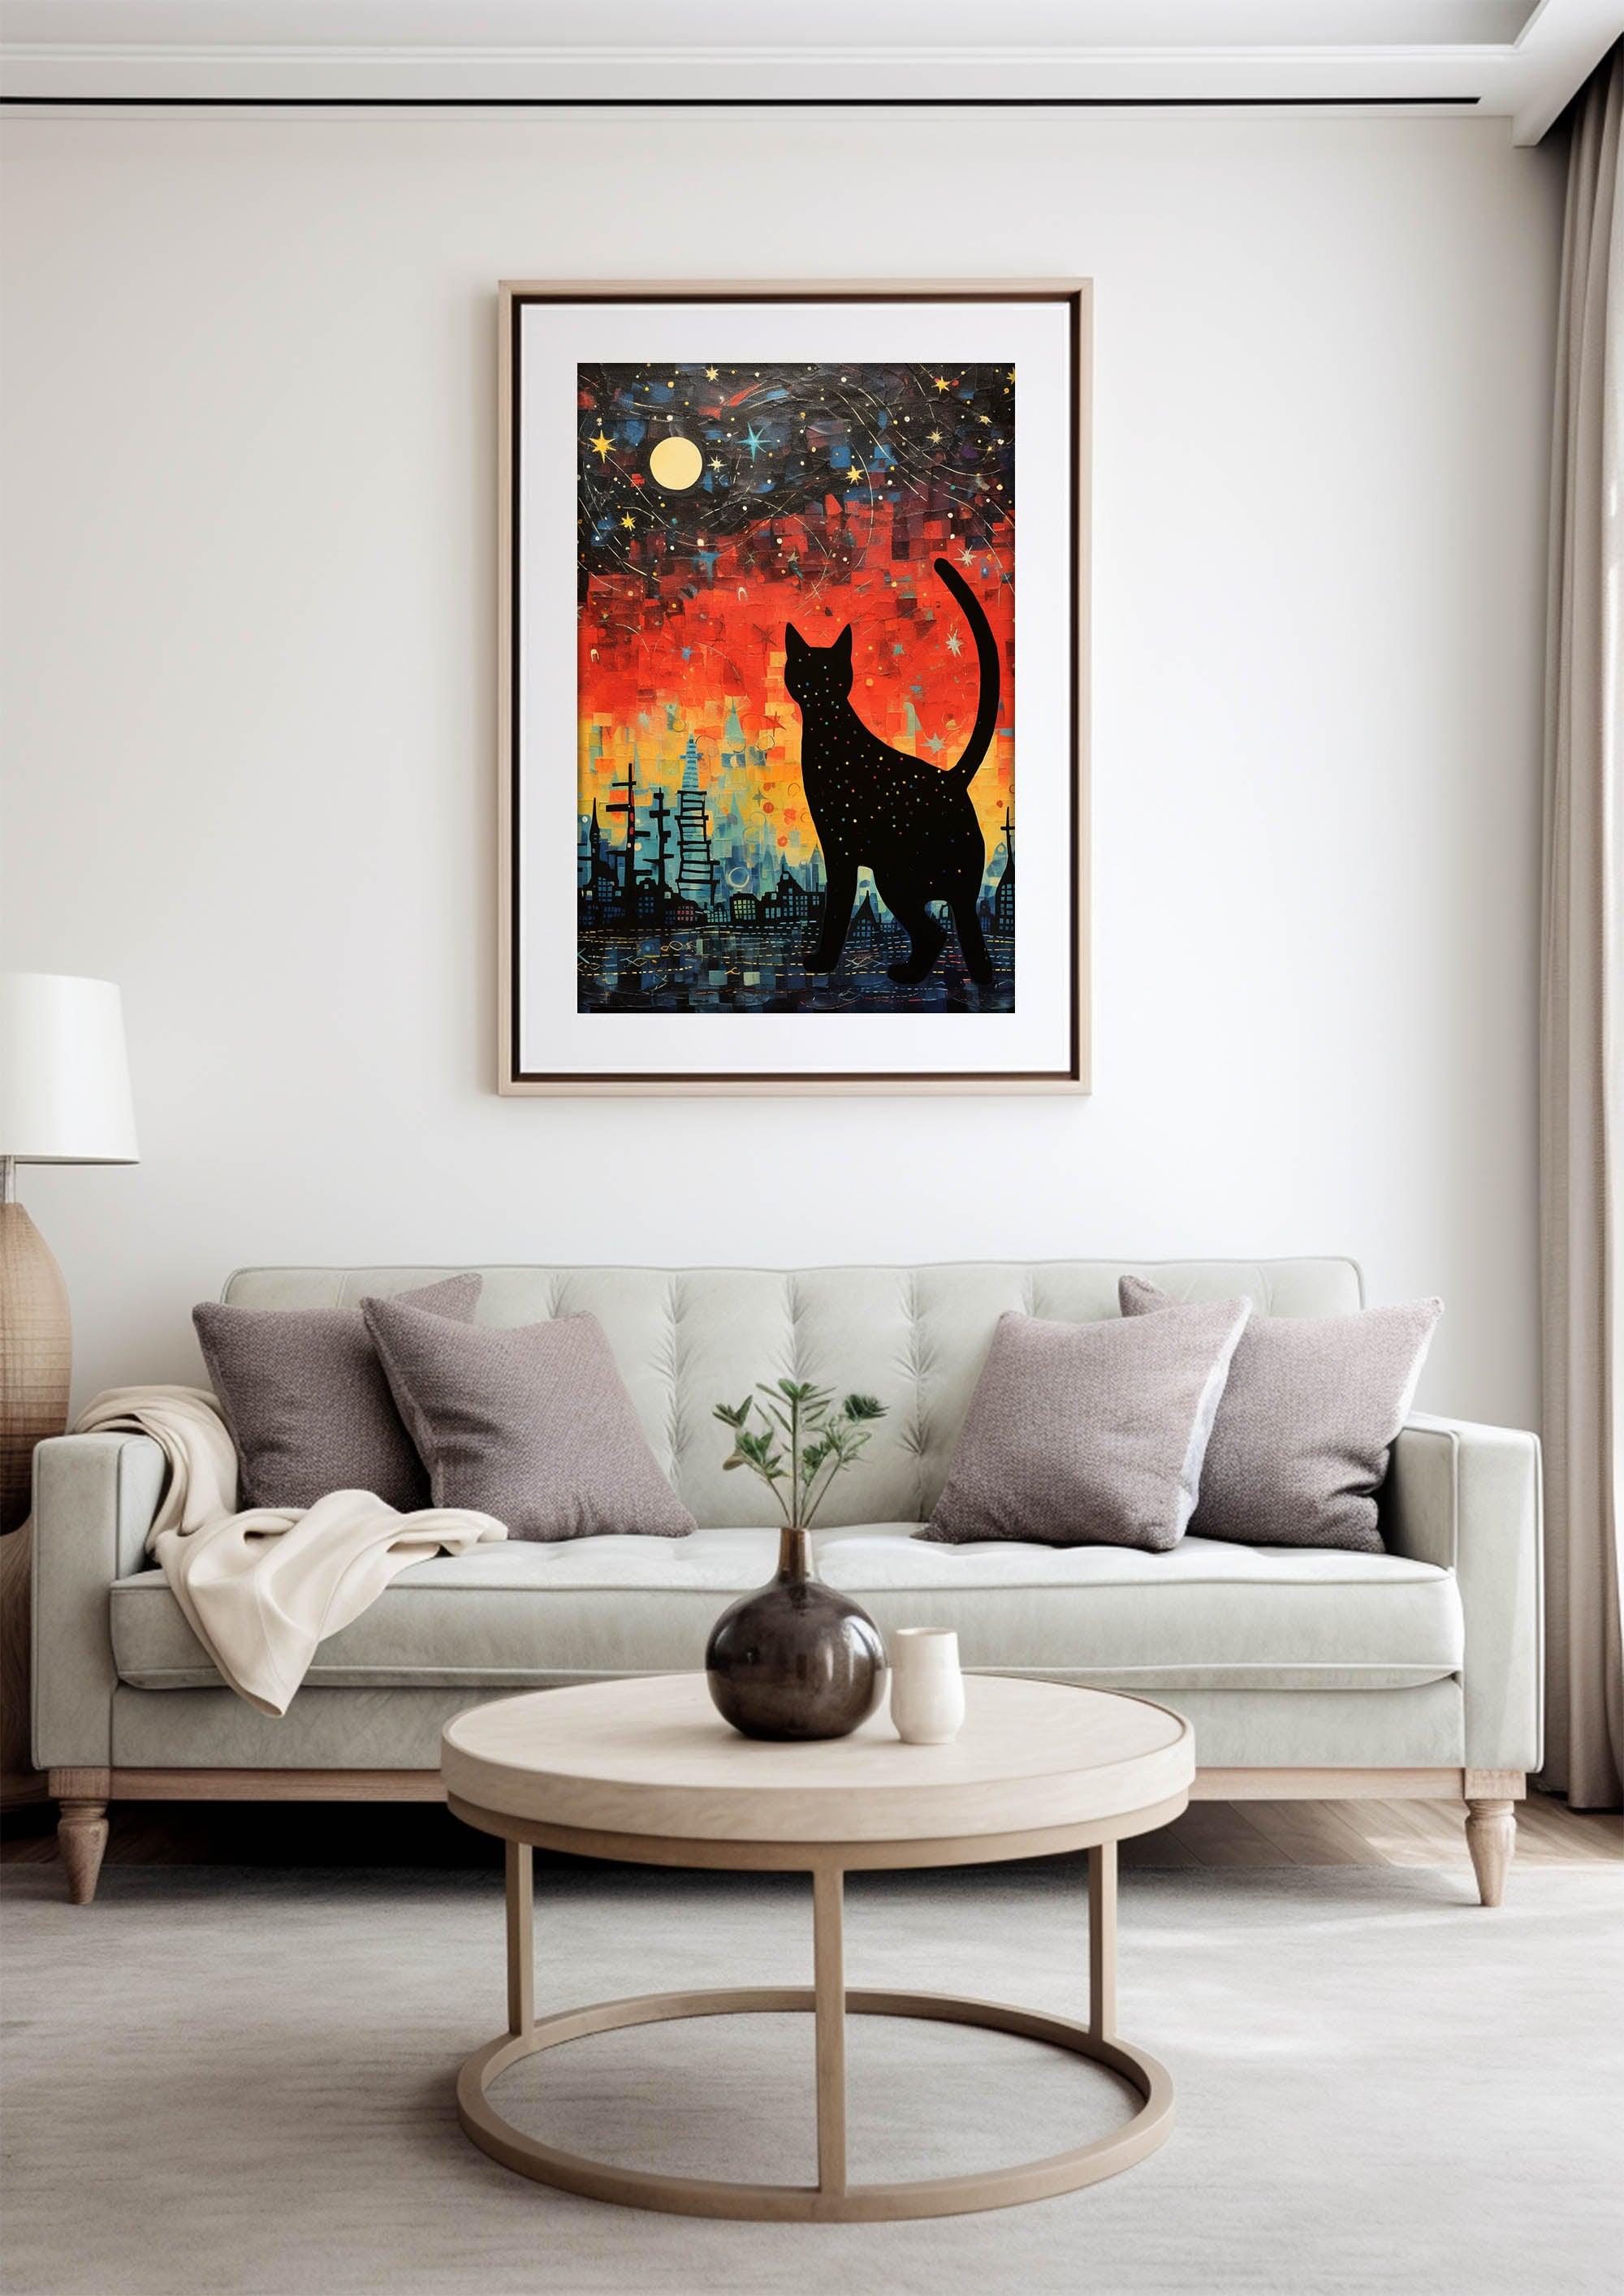 Cat Illustration | Starry Sky Wall Art Decor |Wall Art Print |Van Gogh style|Bedroom Livingroom,Kidsroom|PRINTABLE Art |Digital Download